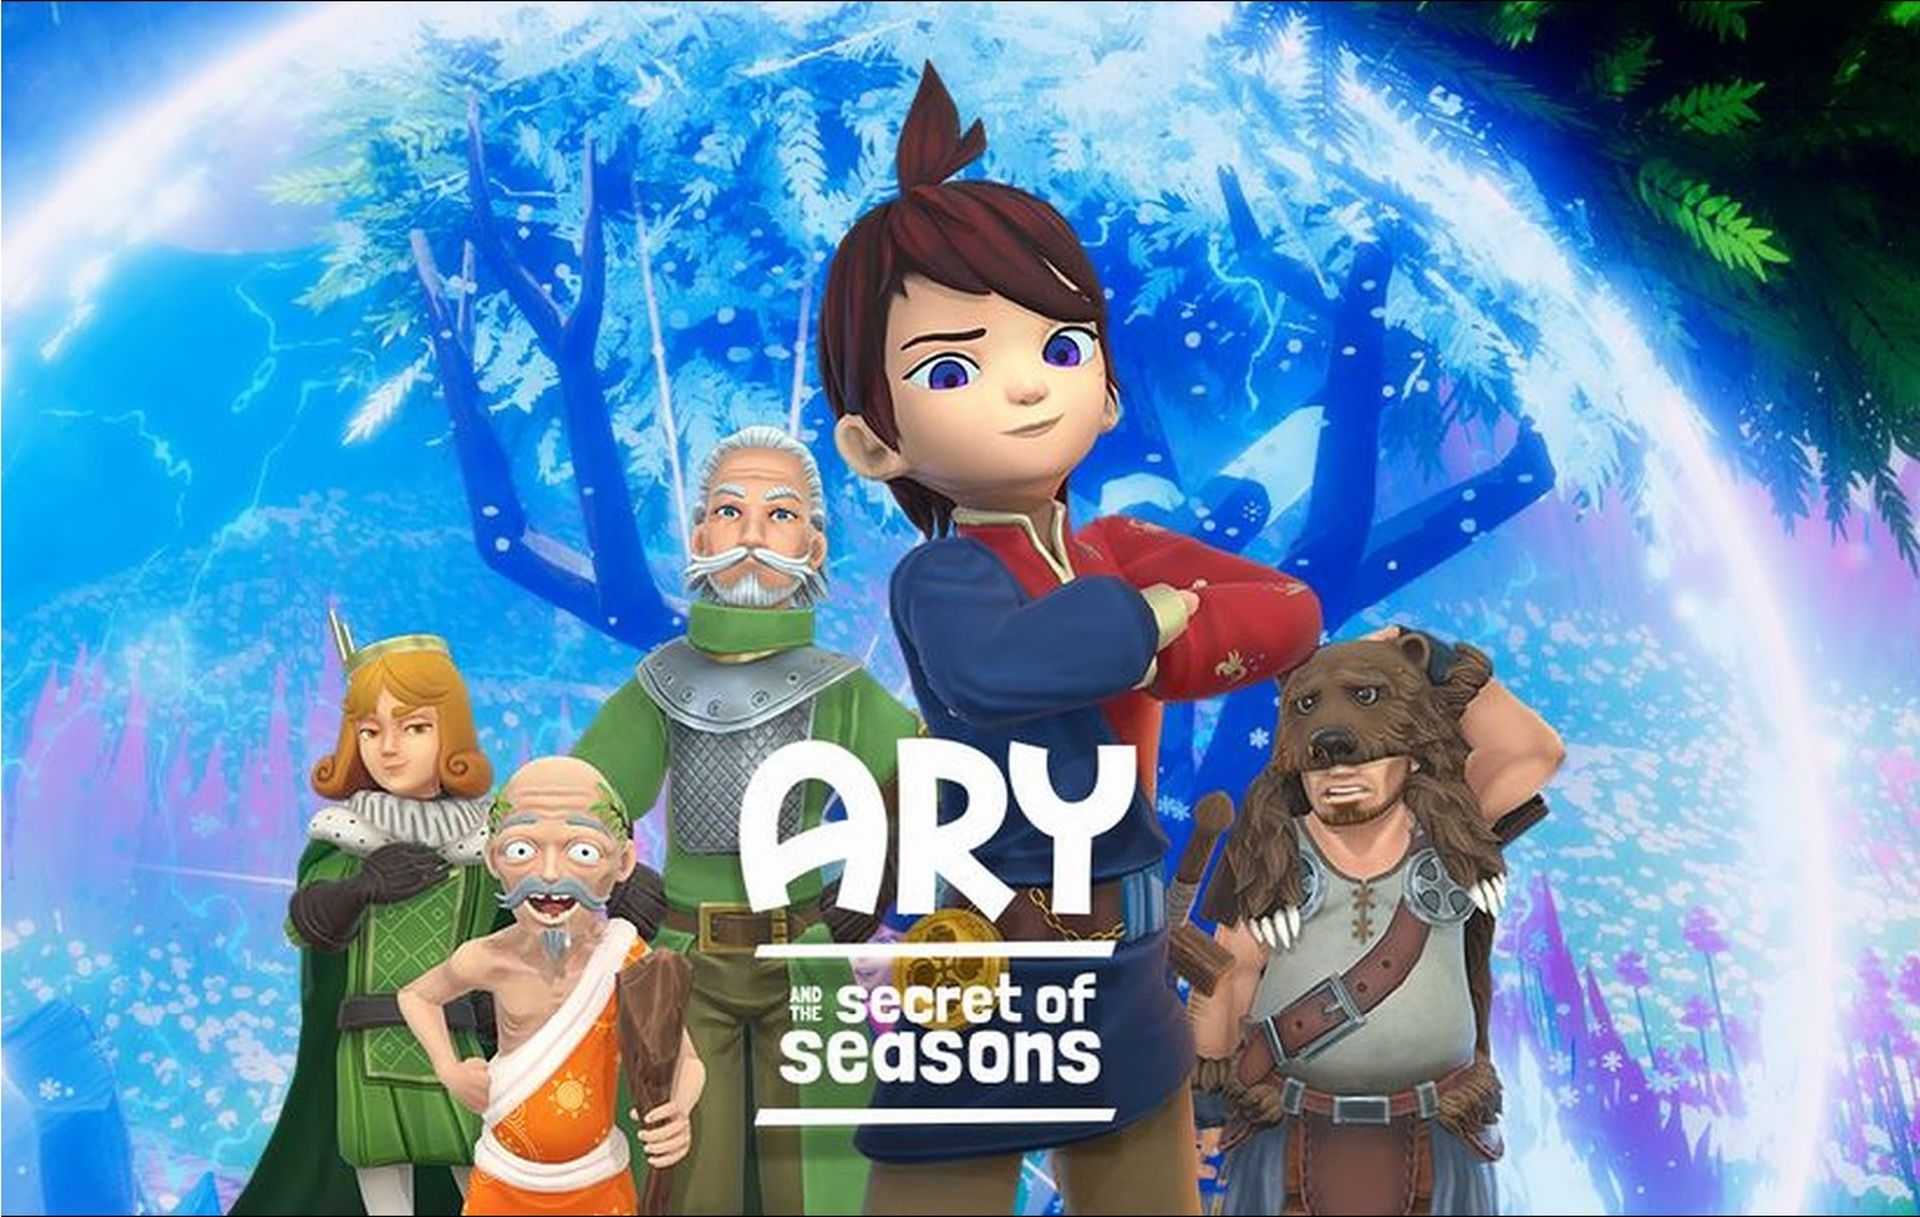 ARY and the Secret of Seasons оружие. ARY and the Secret of Seasons(2020) (Patch 4) PC.